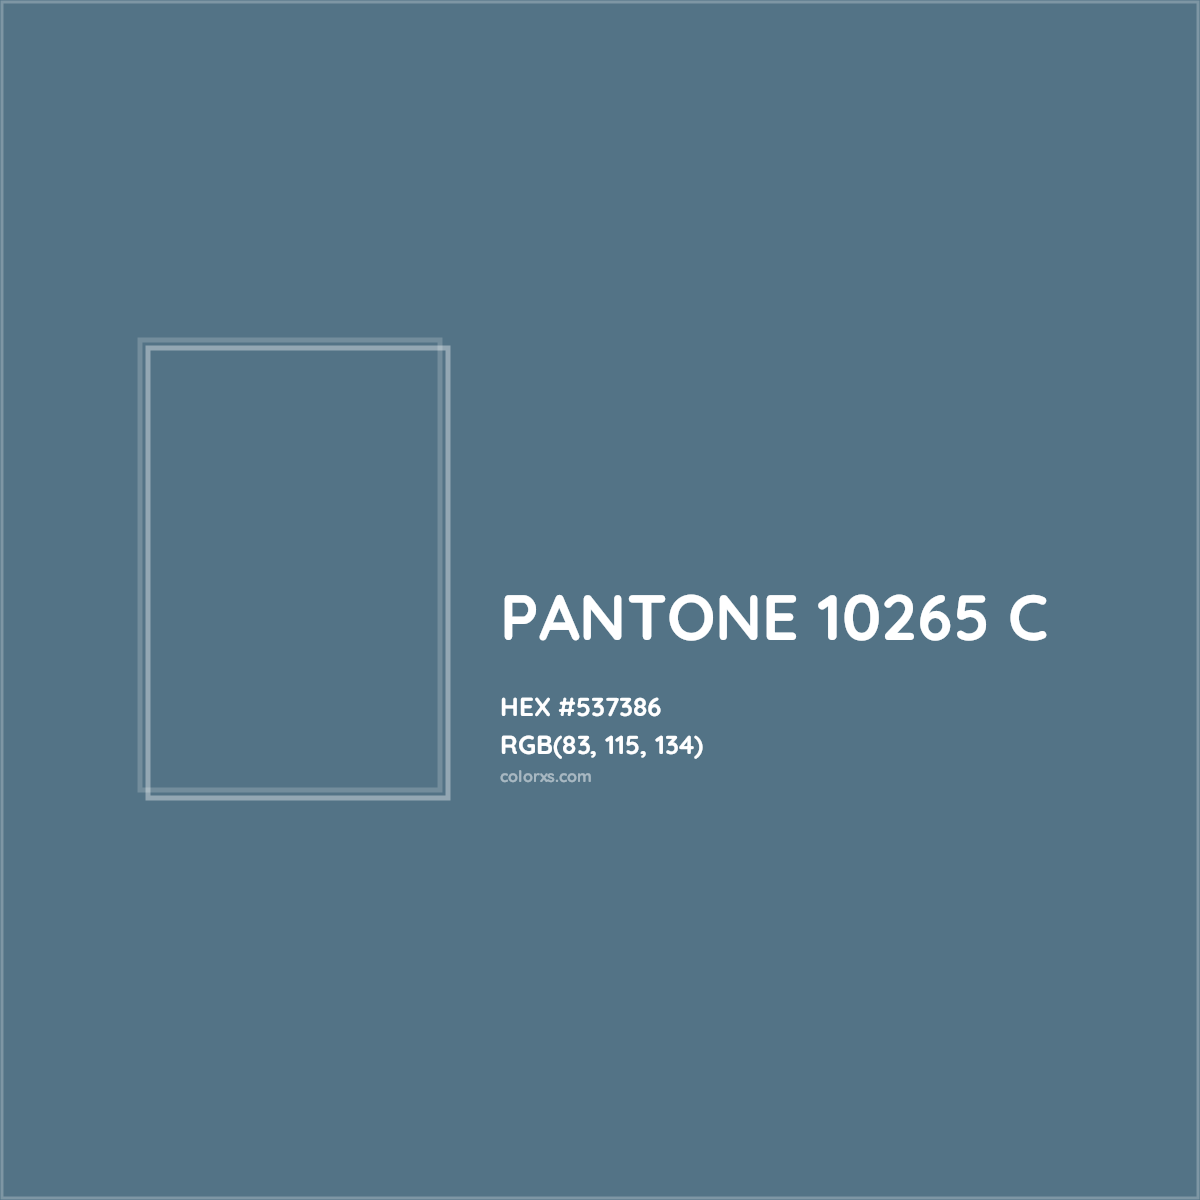 HEX #537386 PANTONE 10265 C CMS Pantone PMS - Color Code